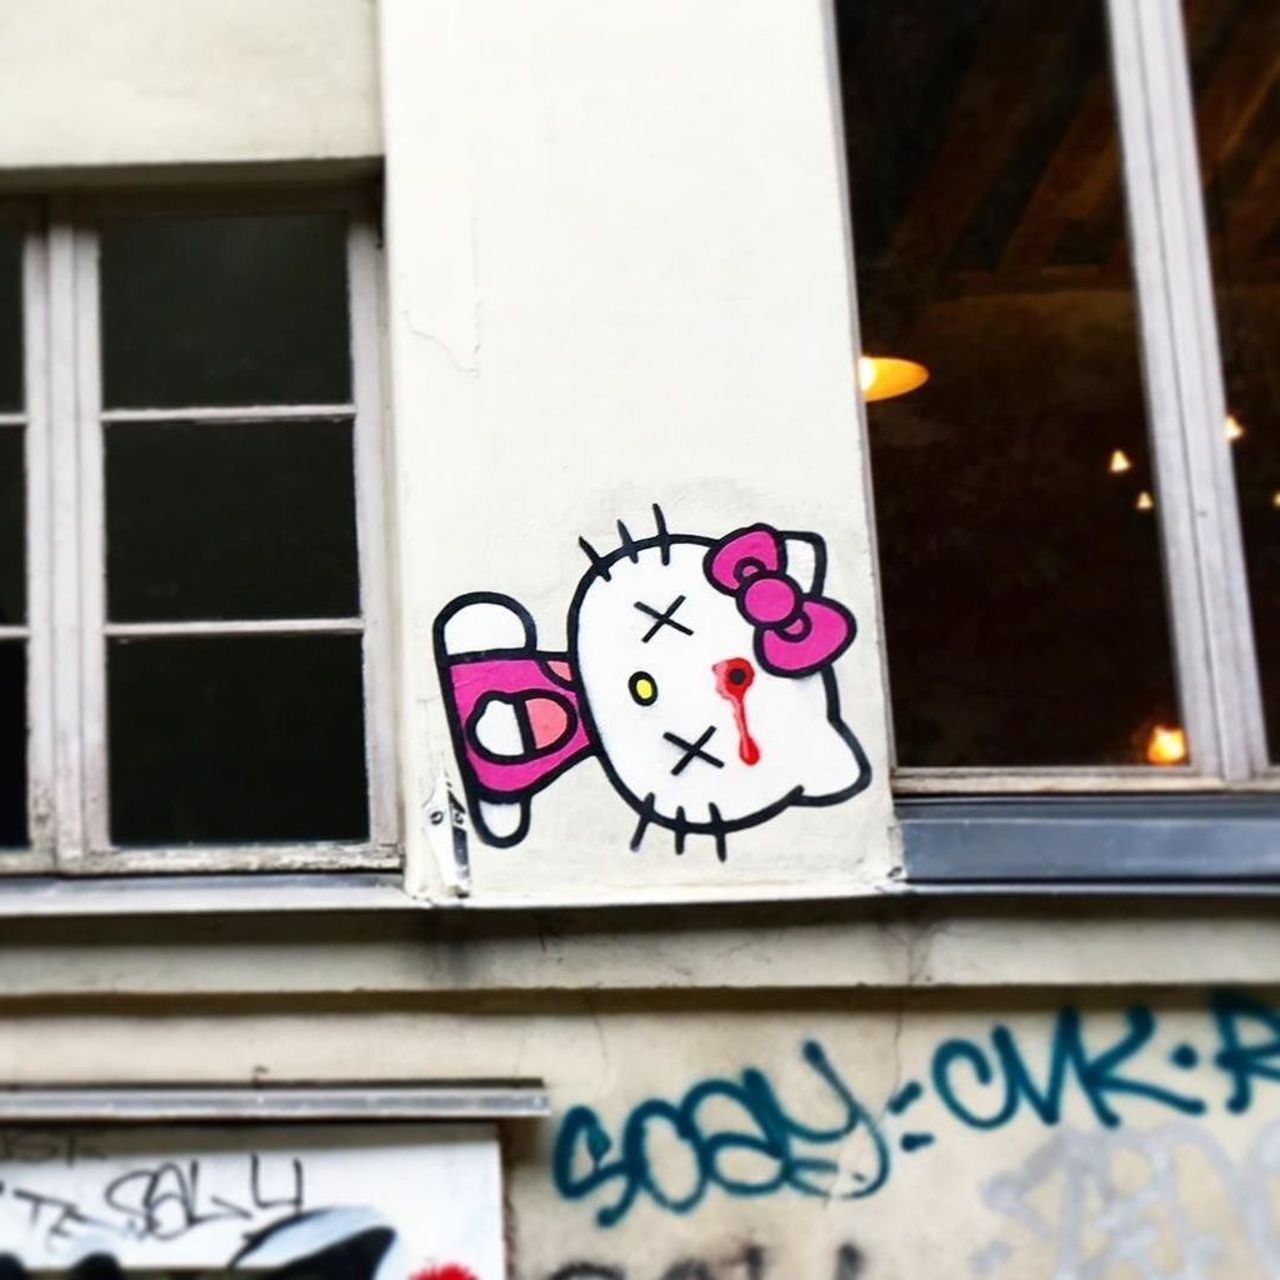 Street art Paris #Art #ArtDeRue #ArtUrbain #UrbanArt #UrbanGraffiti #Graffiti #UrbanStreetArt #StreetArt #StreetArt… https://t.co/Q36QXVrDlb